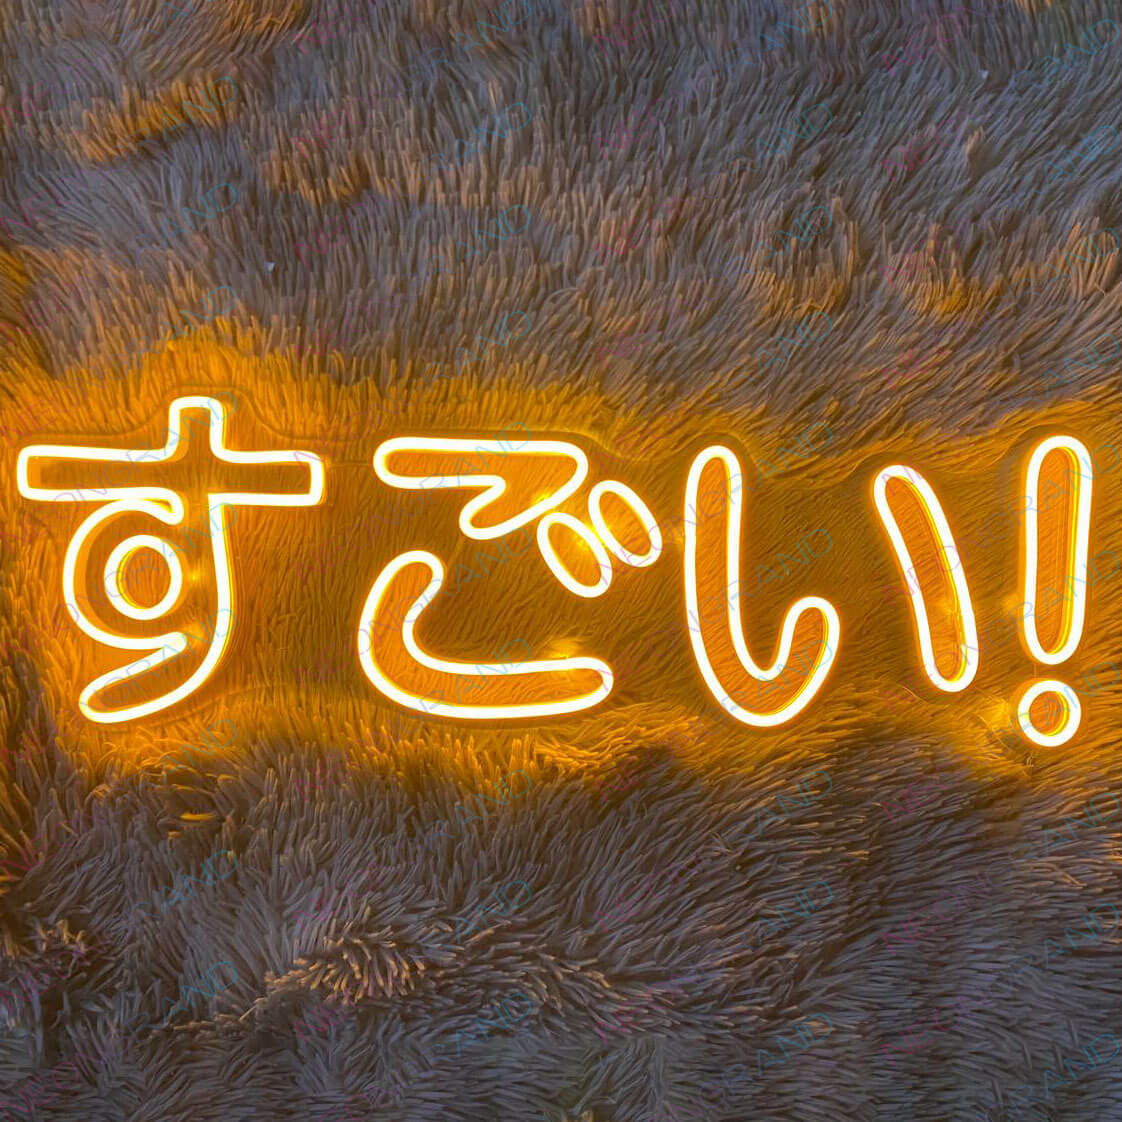 Excellent Japanese Led Sign Letter Neon Light